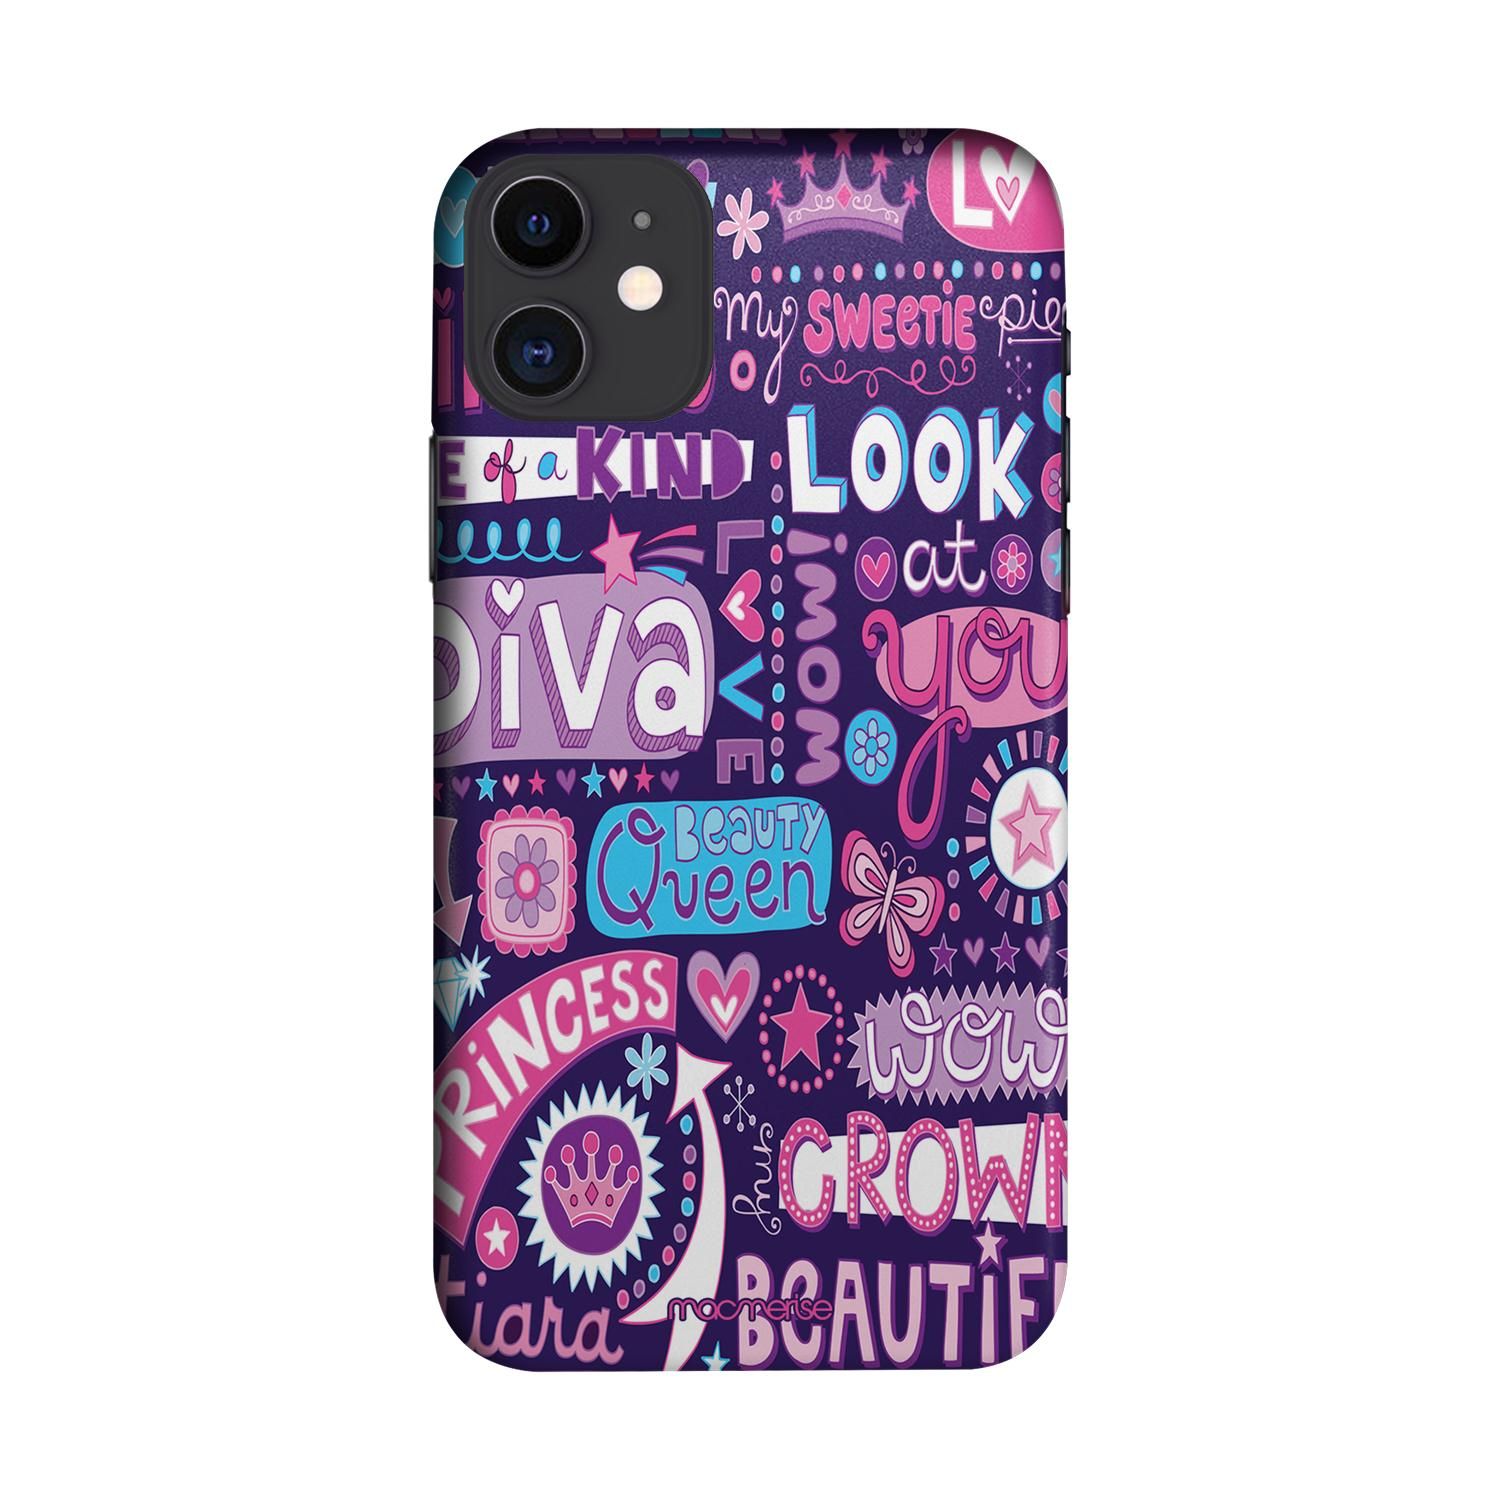 Diva Diaries - Sleek Phone Case for iPhone 11